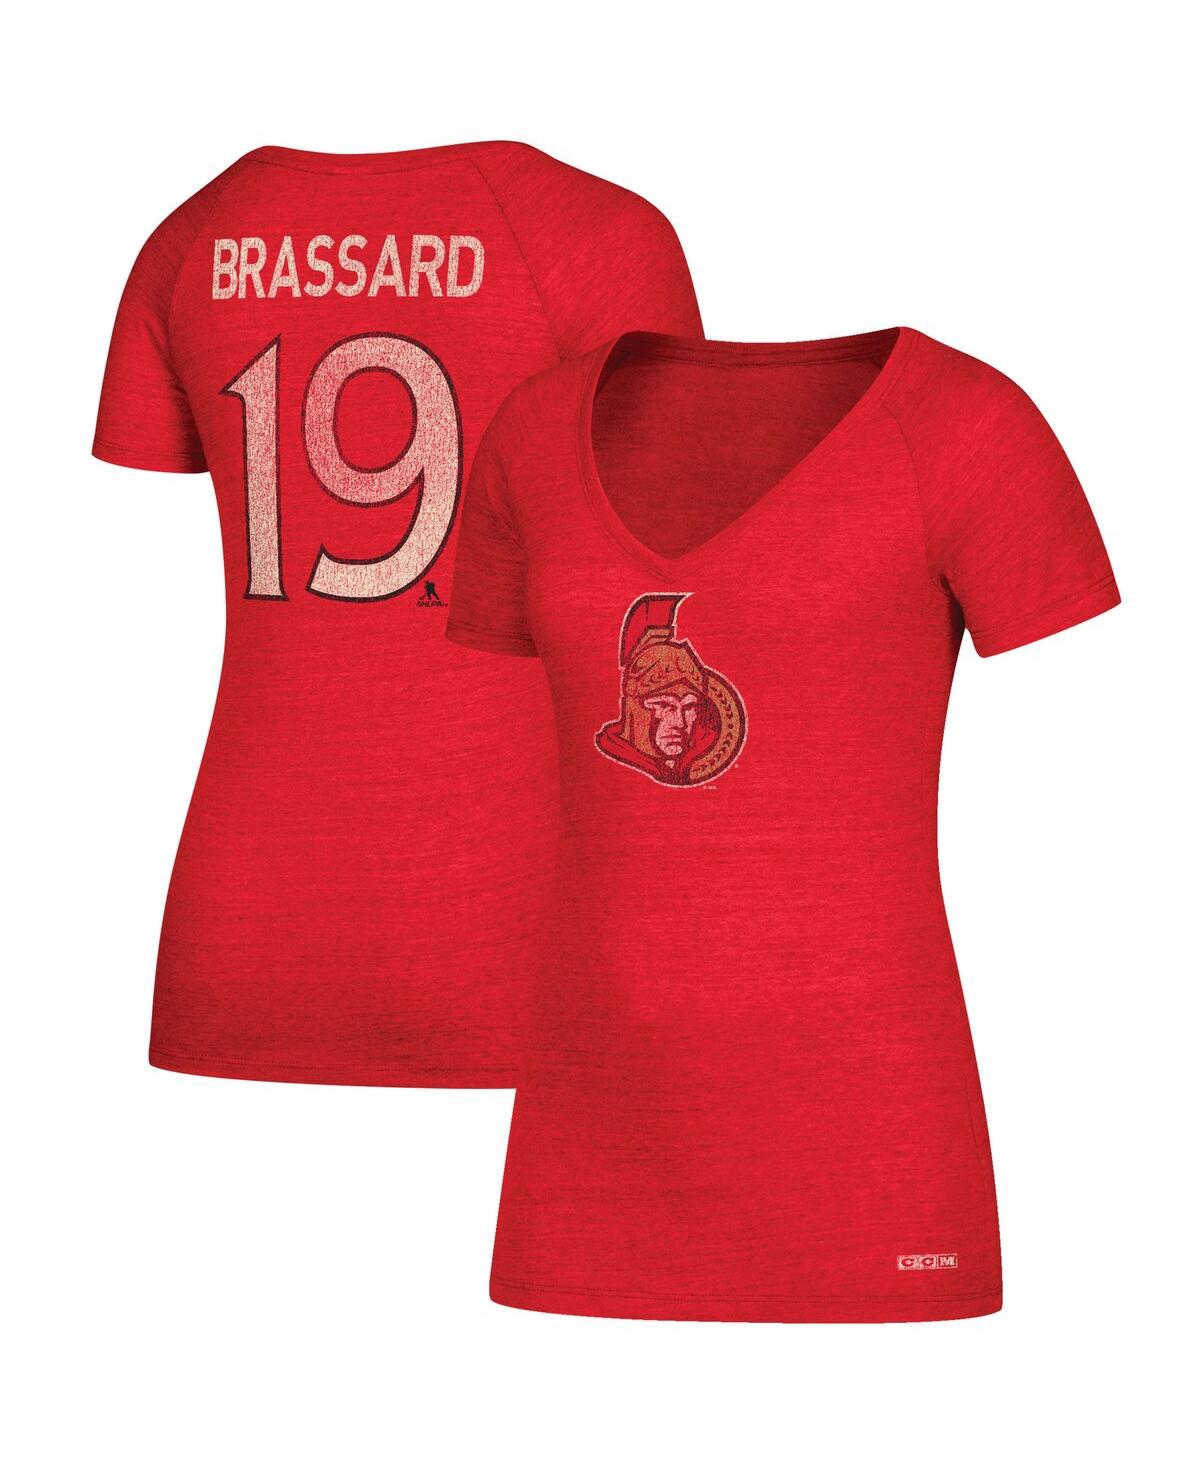 Women's Ccm Derick Brassard Red Ottawa Senators Name and Number V-Neck T-shirt - Red